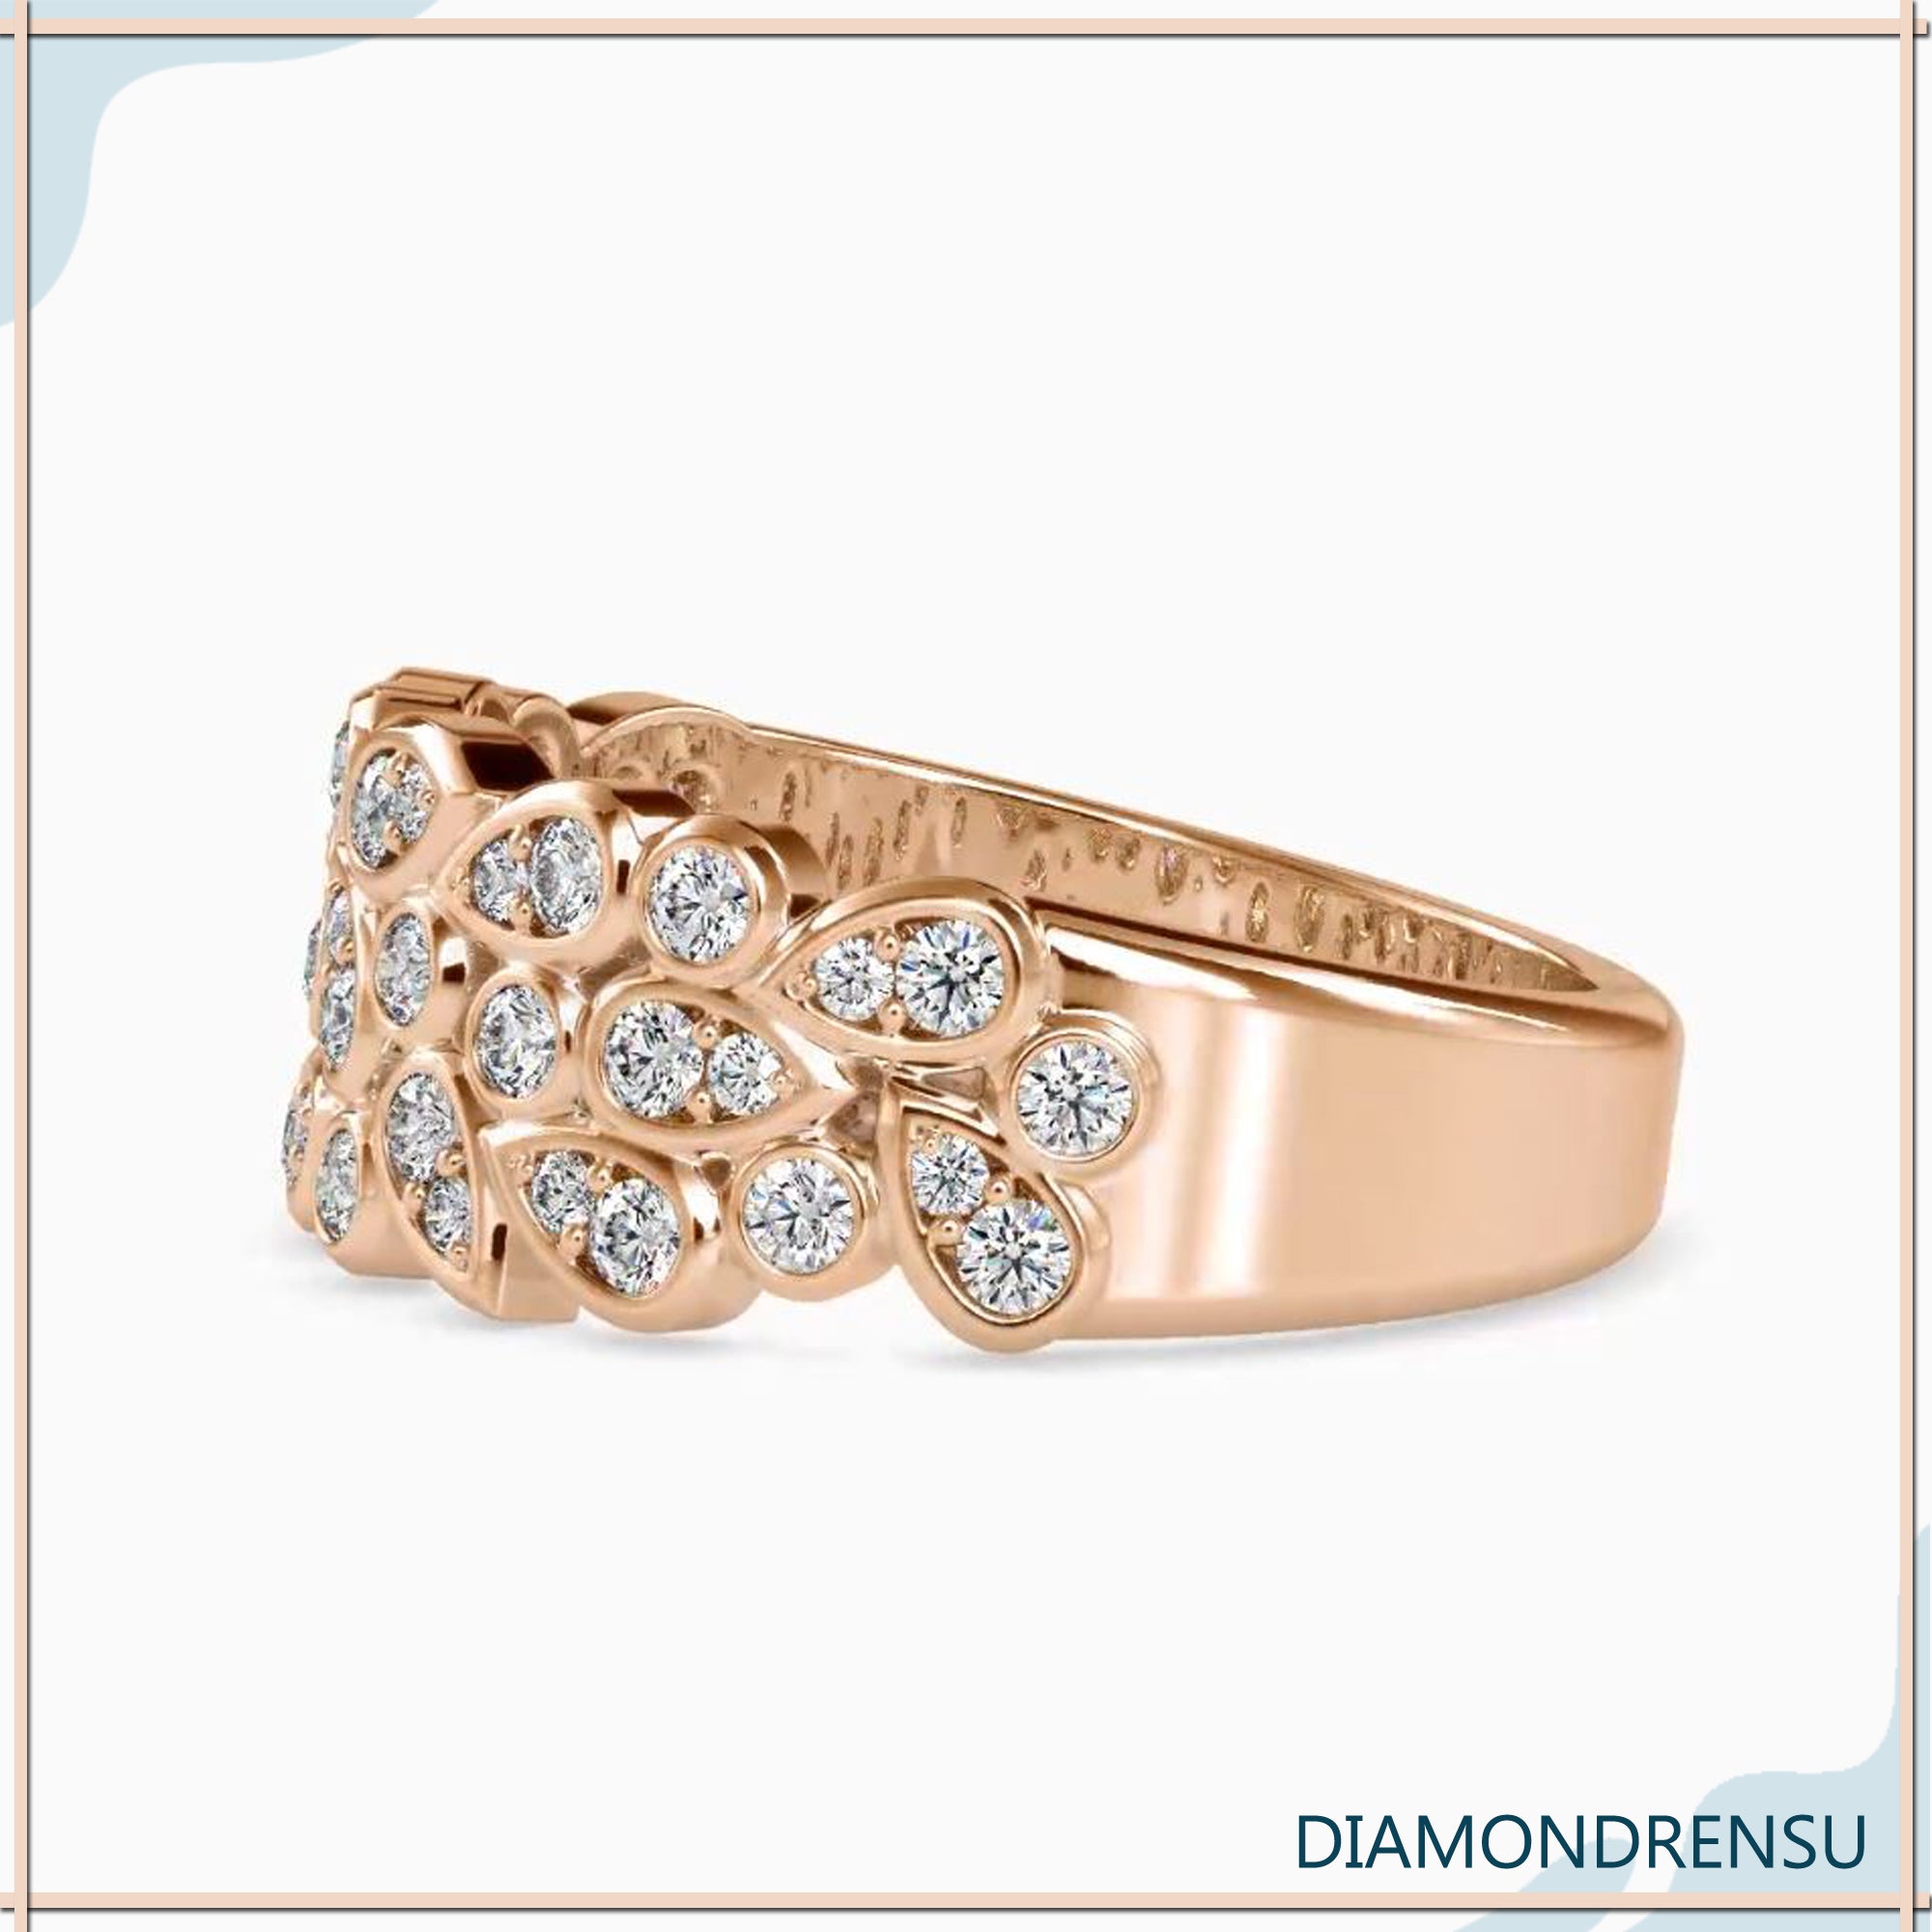 rose gold wedding bands - diamondrensu